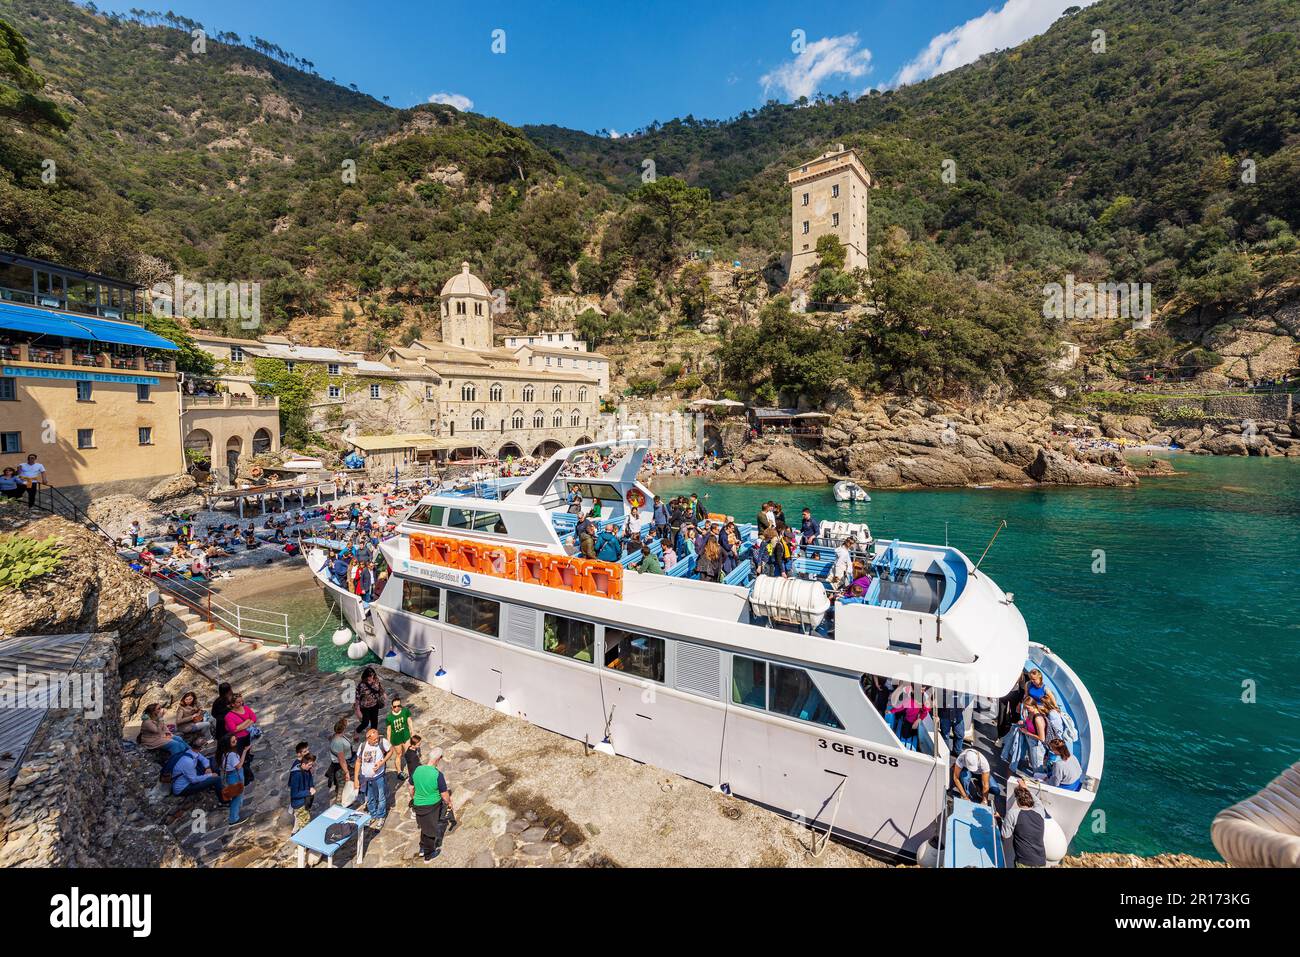 Ancient San Fruttuoso Abbey, X-XI century. Beach and ferry crowded with tourists near Portofino and Camogli, Genoa province, Liguria, Italy, Europe. Stock Photo